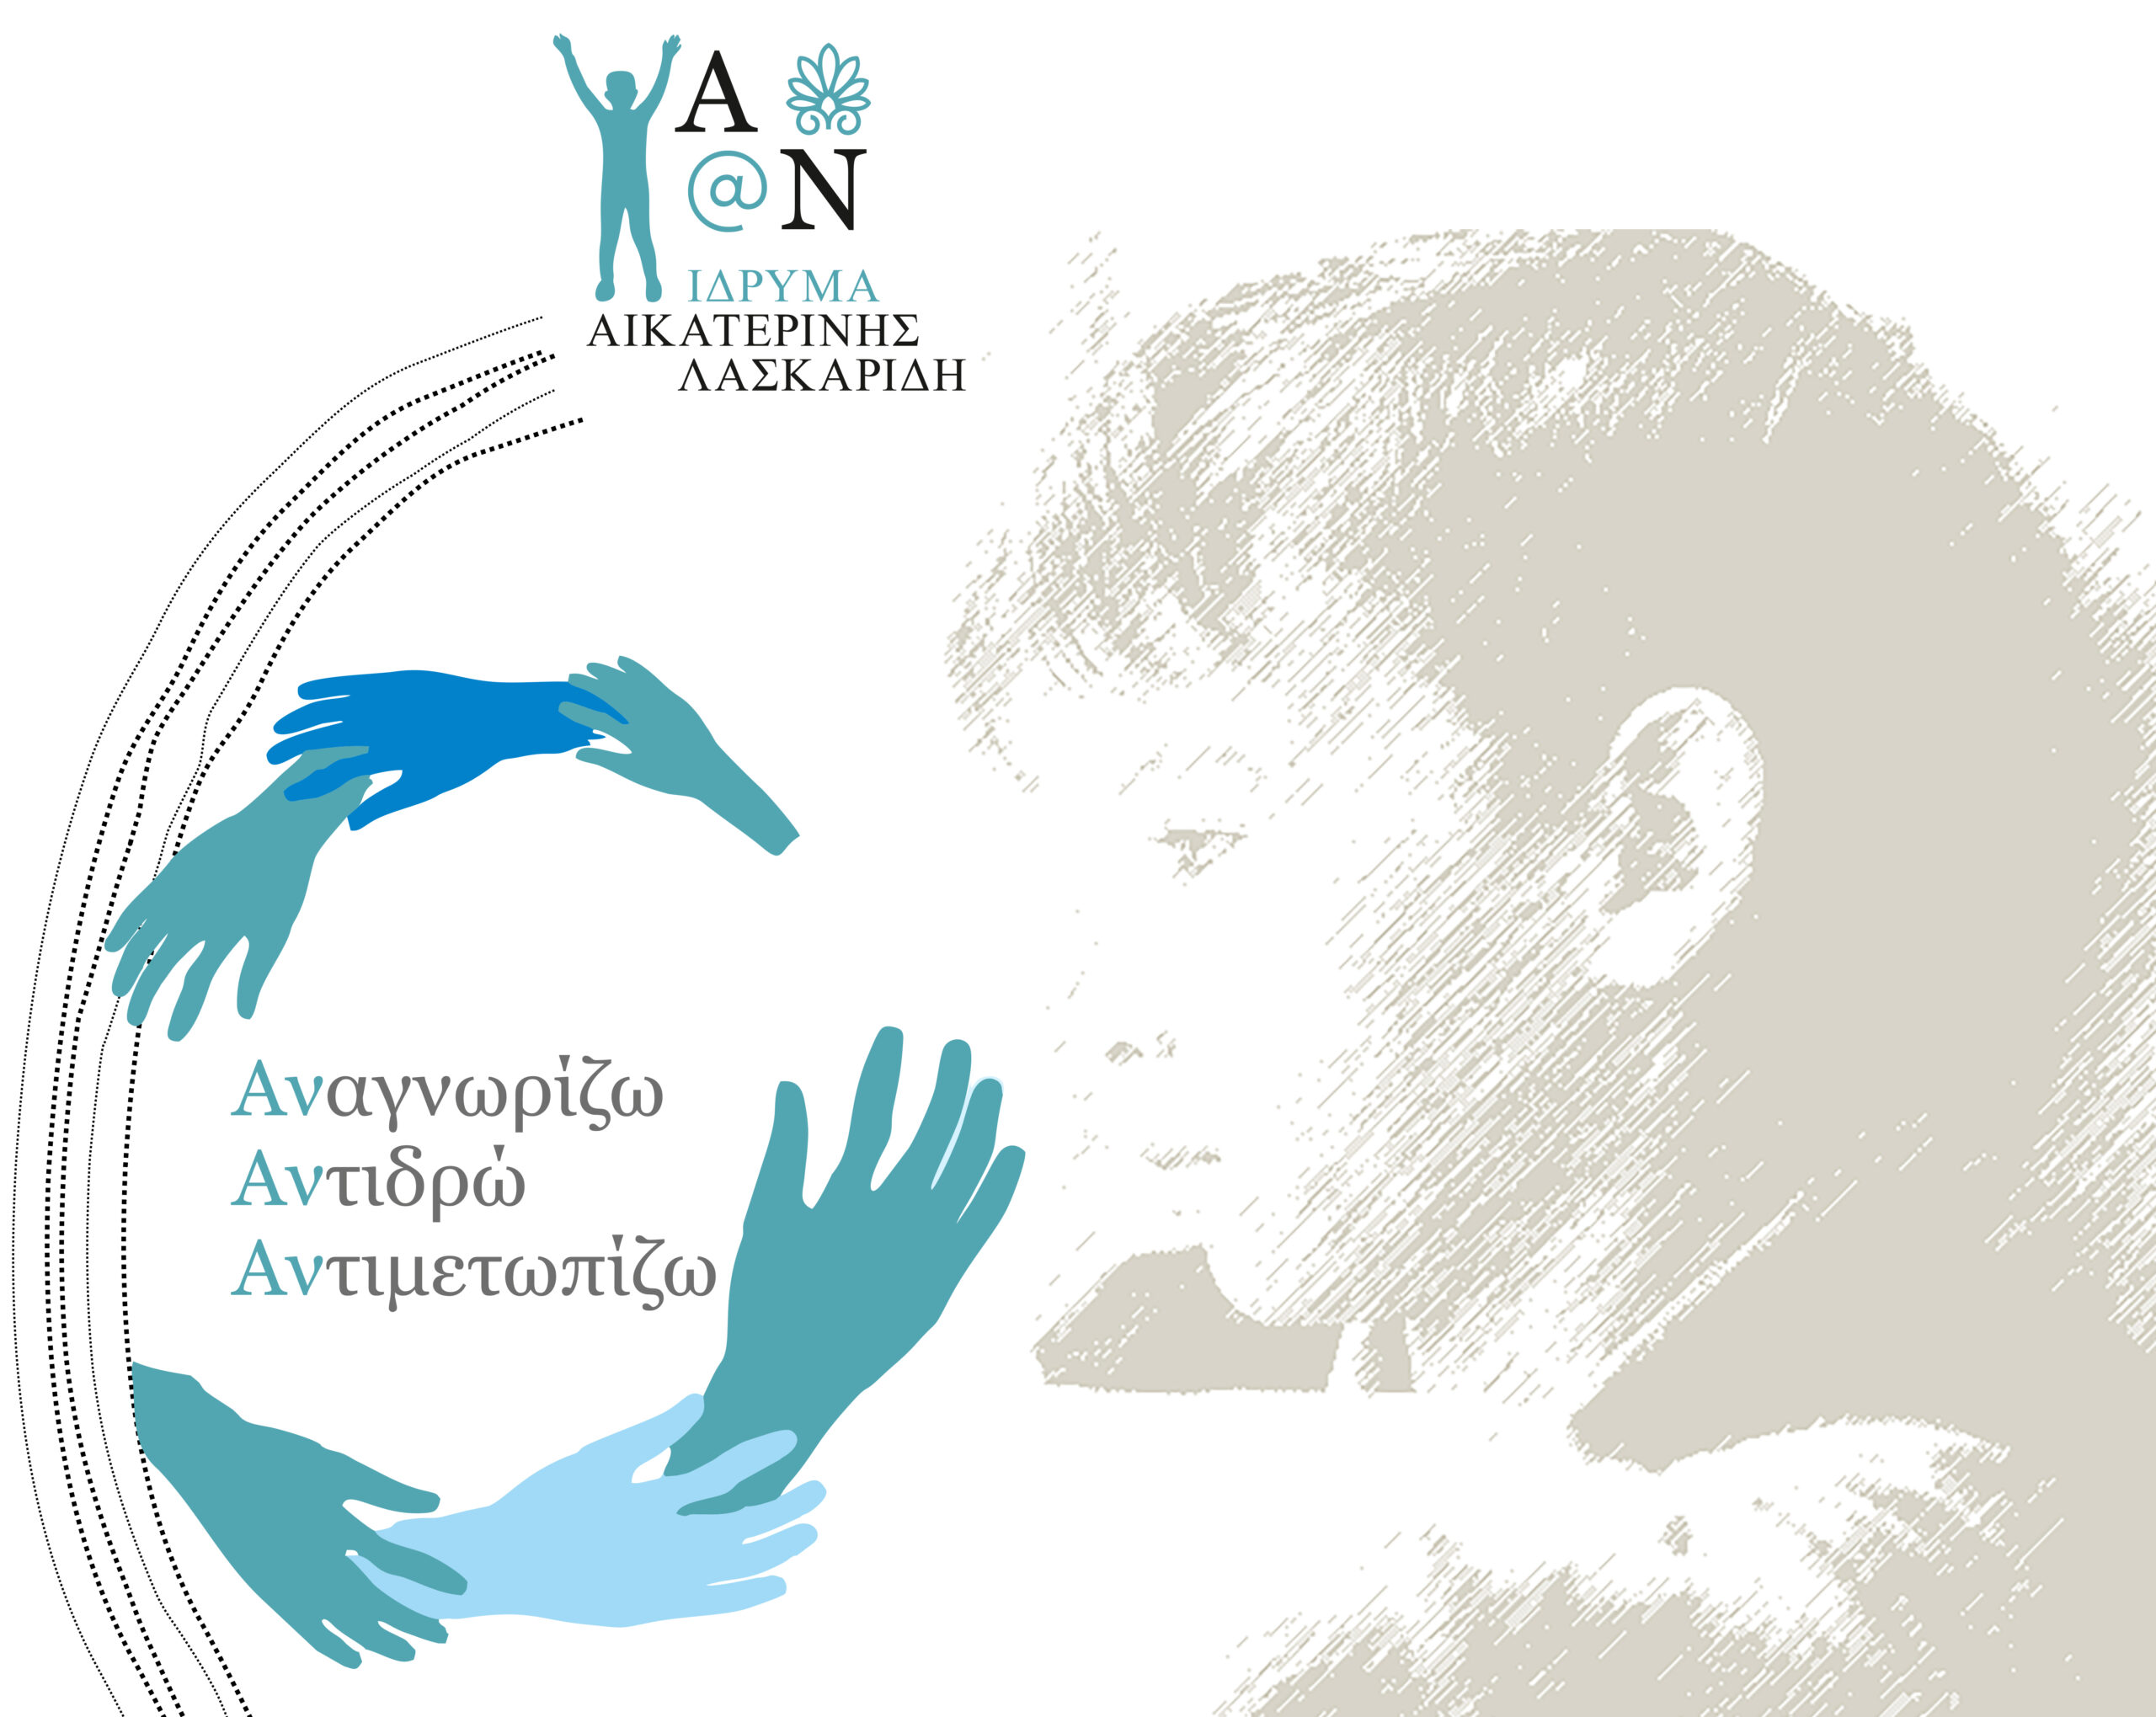 Aikaterini Laskaridis Foundation-ΑΝ - Έναρξη νέου πιλοτικού προγράμματος για την πρόληψη της παιδικής κακοποίησης